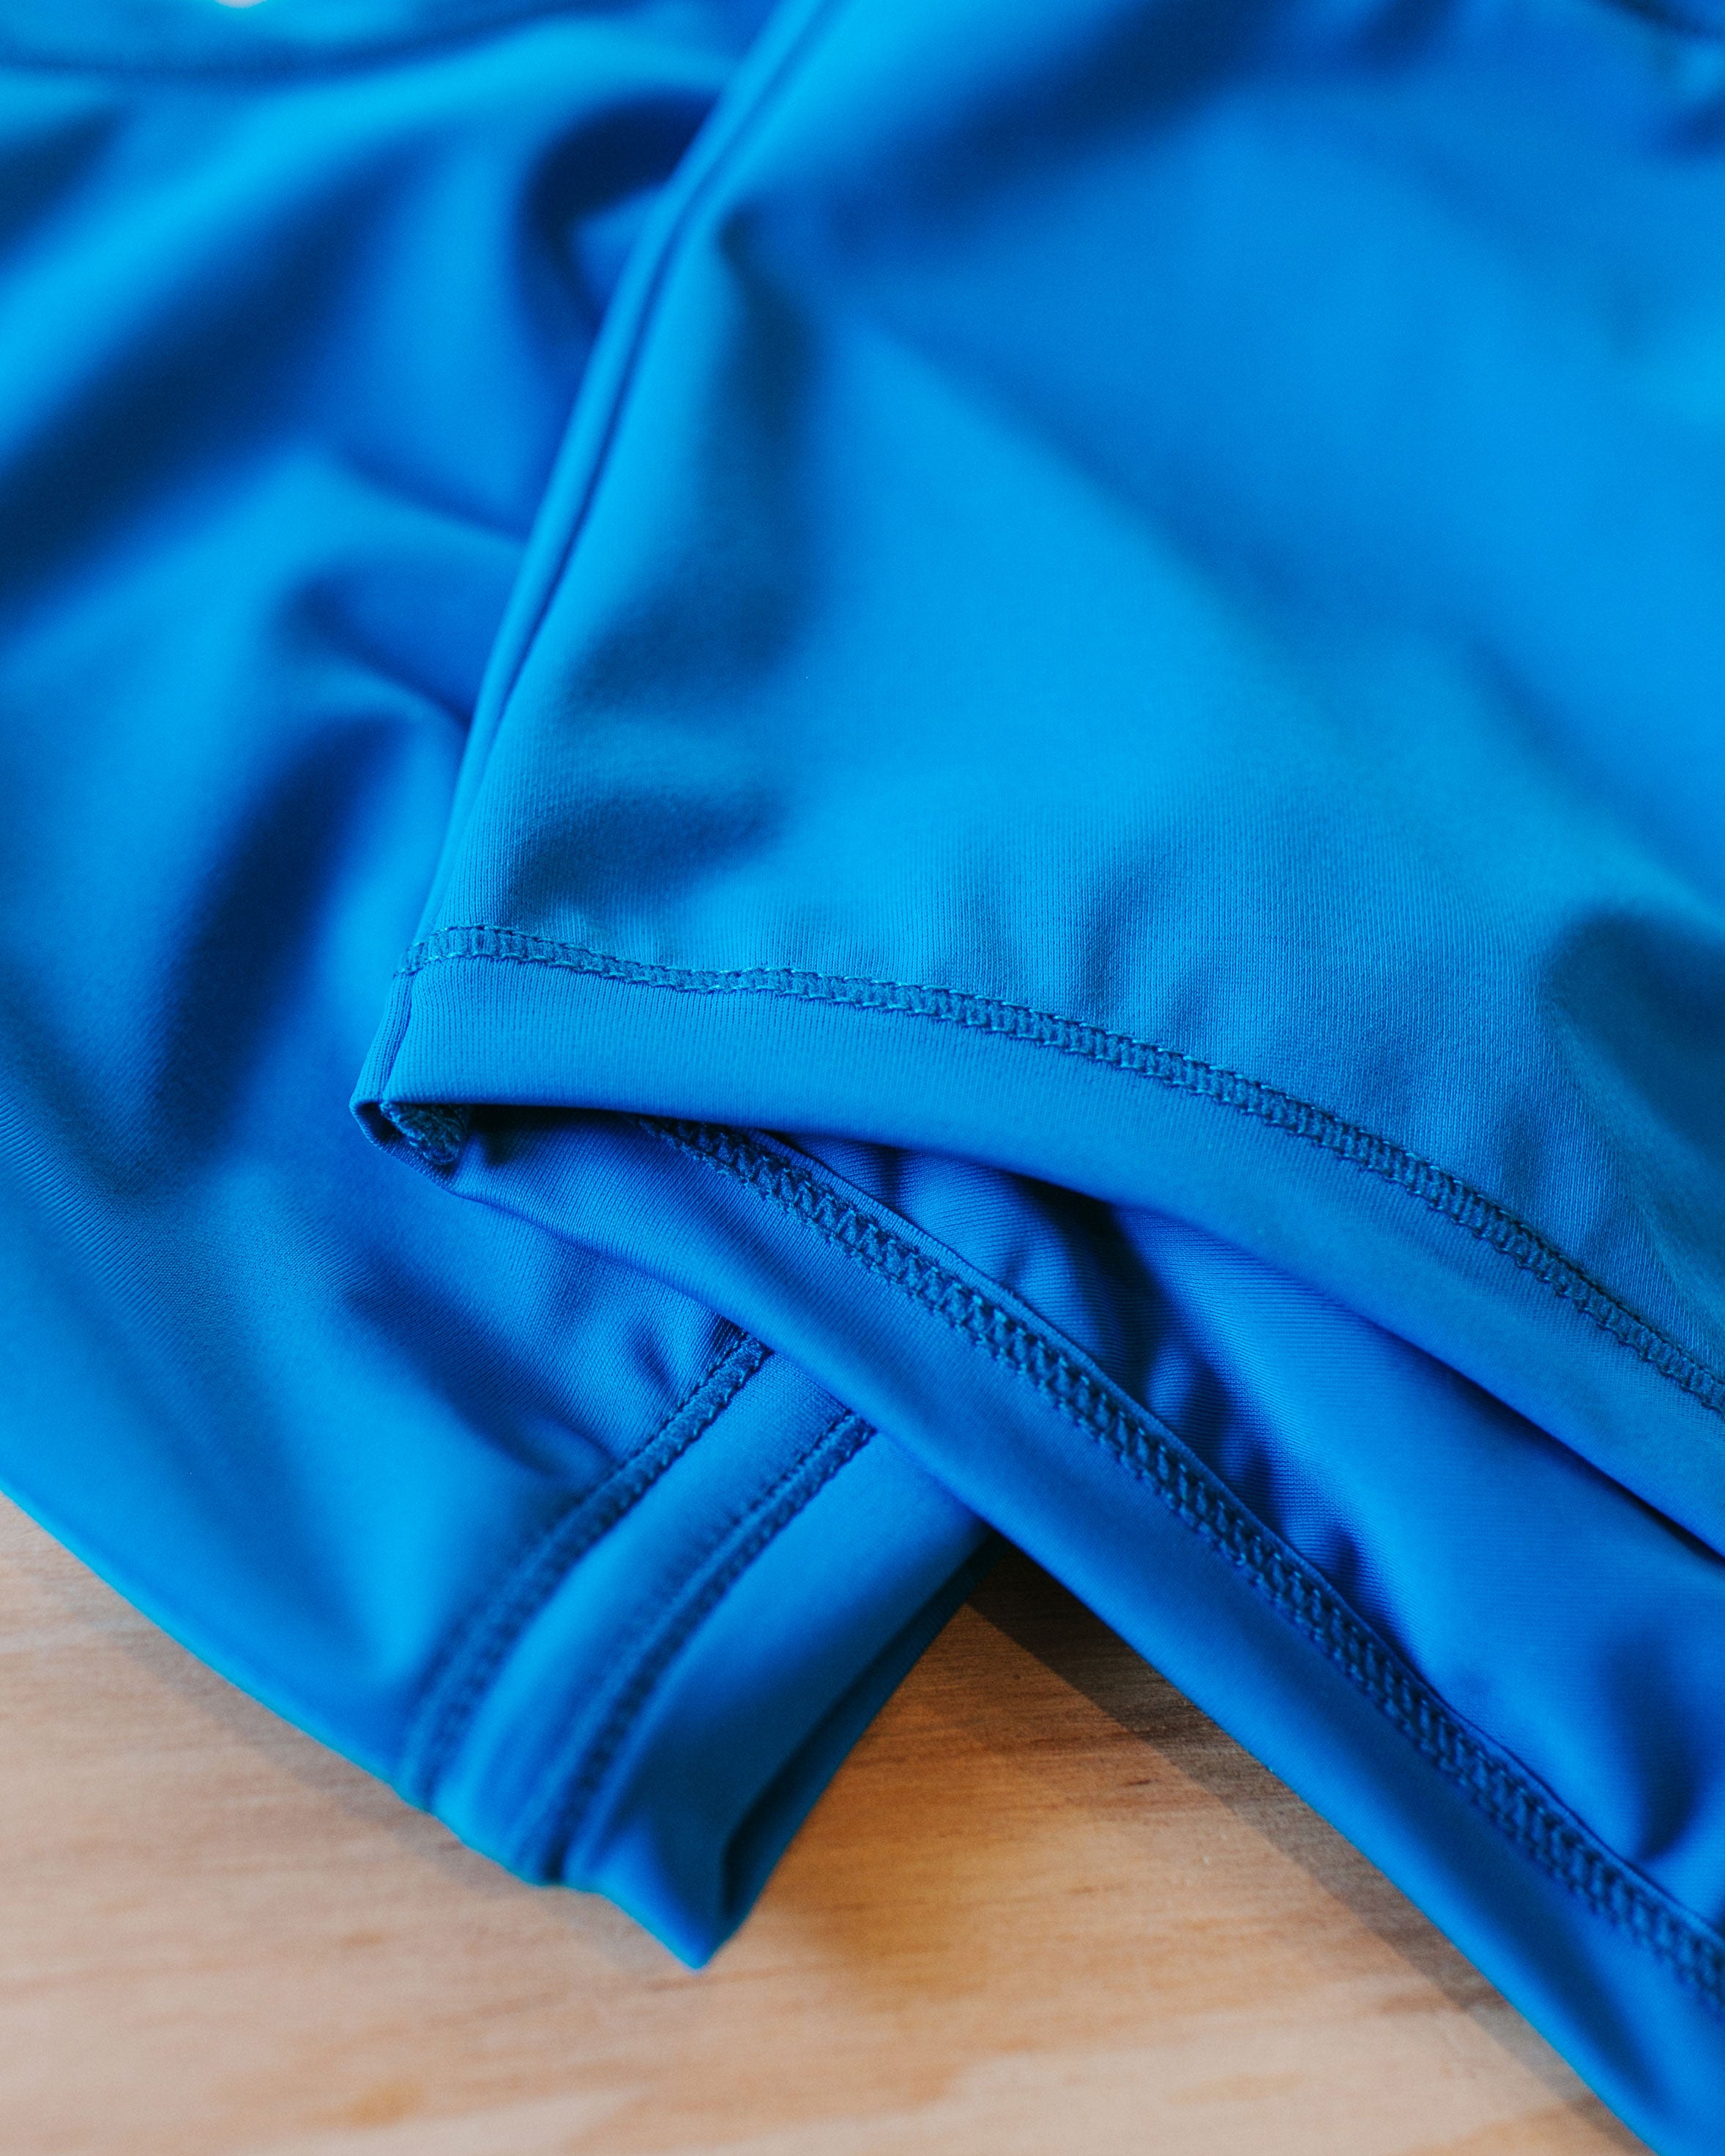 Close up of Marina Blue Swimwear, showing stitching and details.